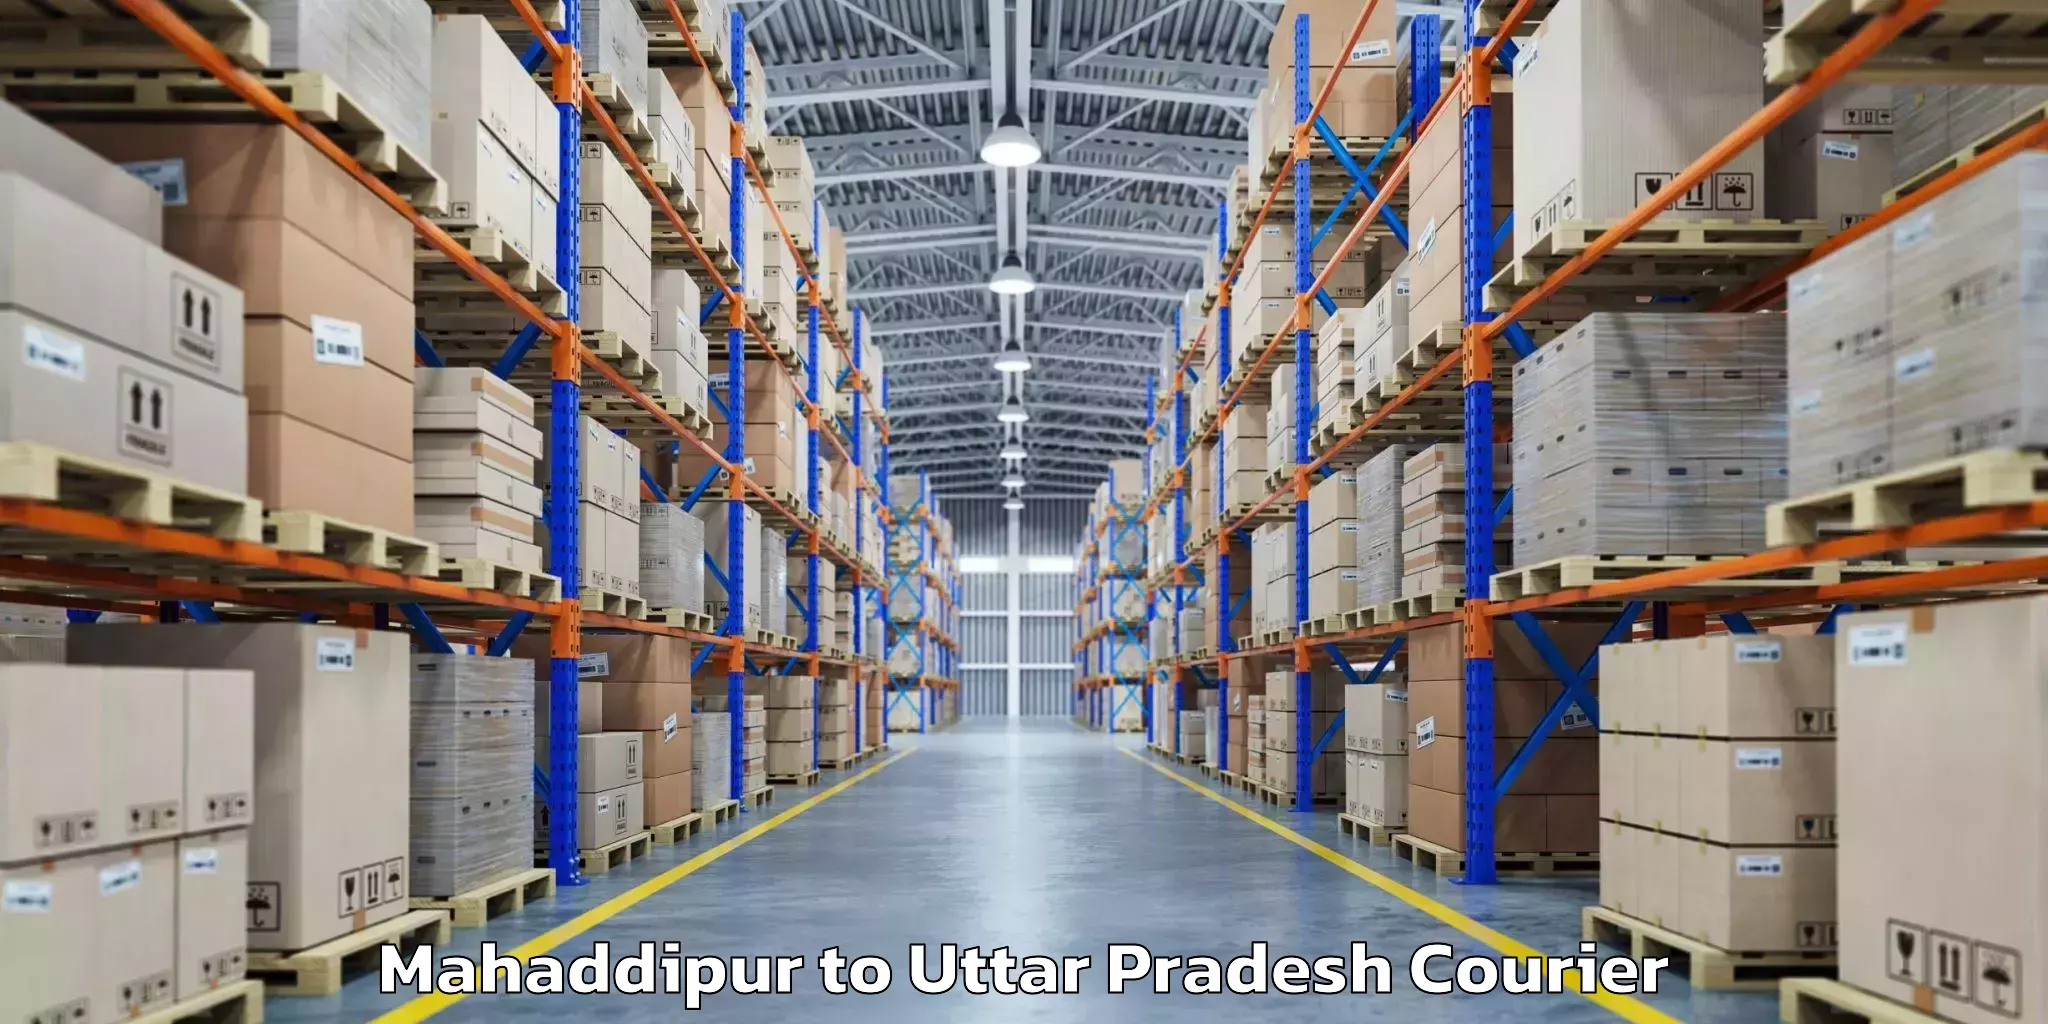 Luggage delivery app Mahaddipur to Uttar Pradesh